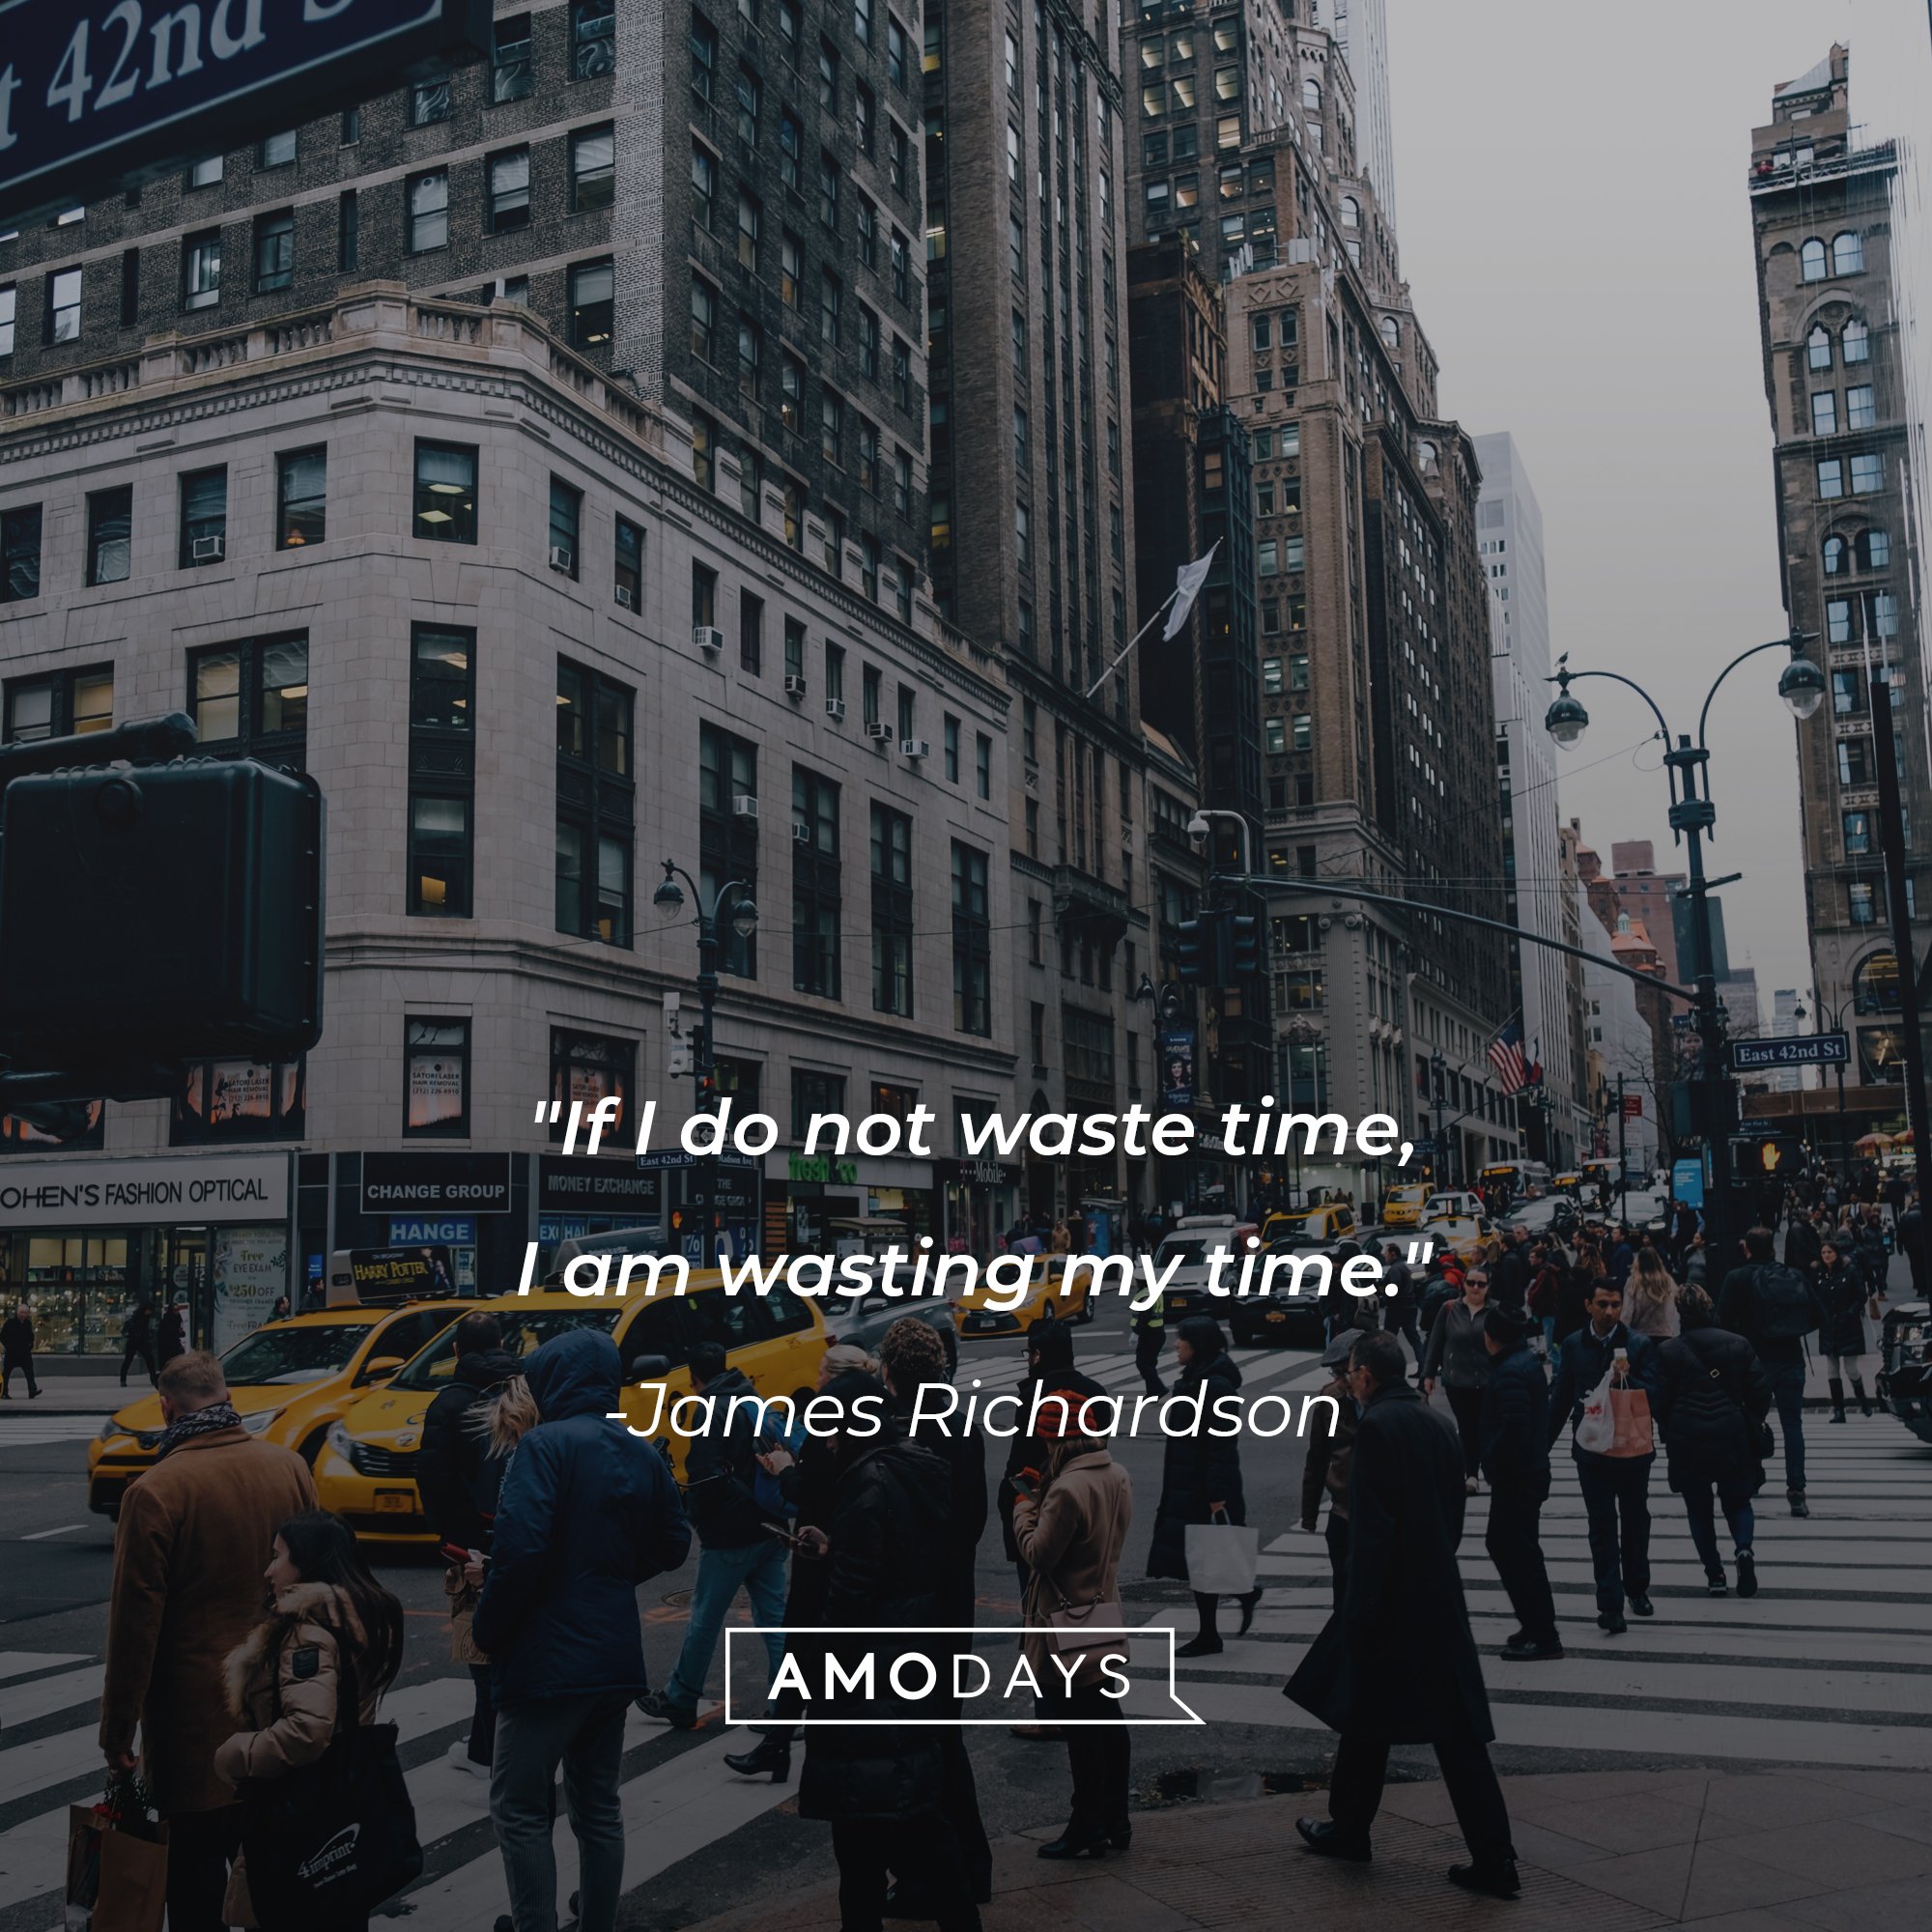 James Richardson’s quote: "If I do not waste time, I am wasting my time." | Image: AmoDays 